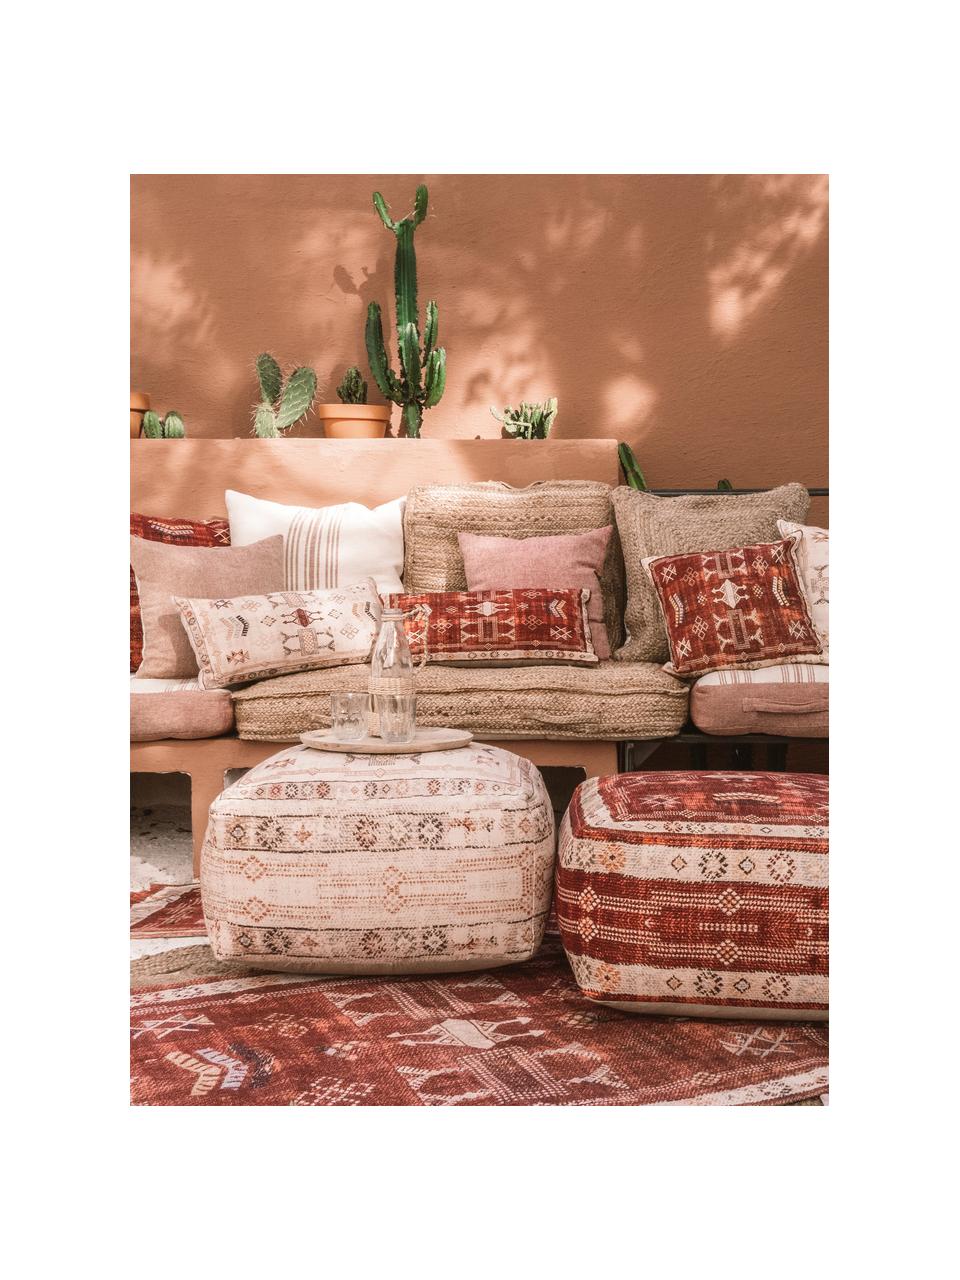 Kissenhülle Tanger mit Ethnomuster in Beige/Rot, 100% Baumwolle, Beige, Rottöne, 30 x 60 cm